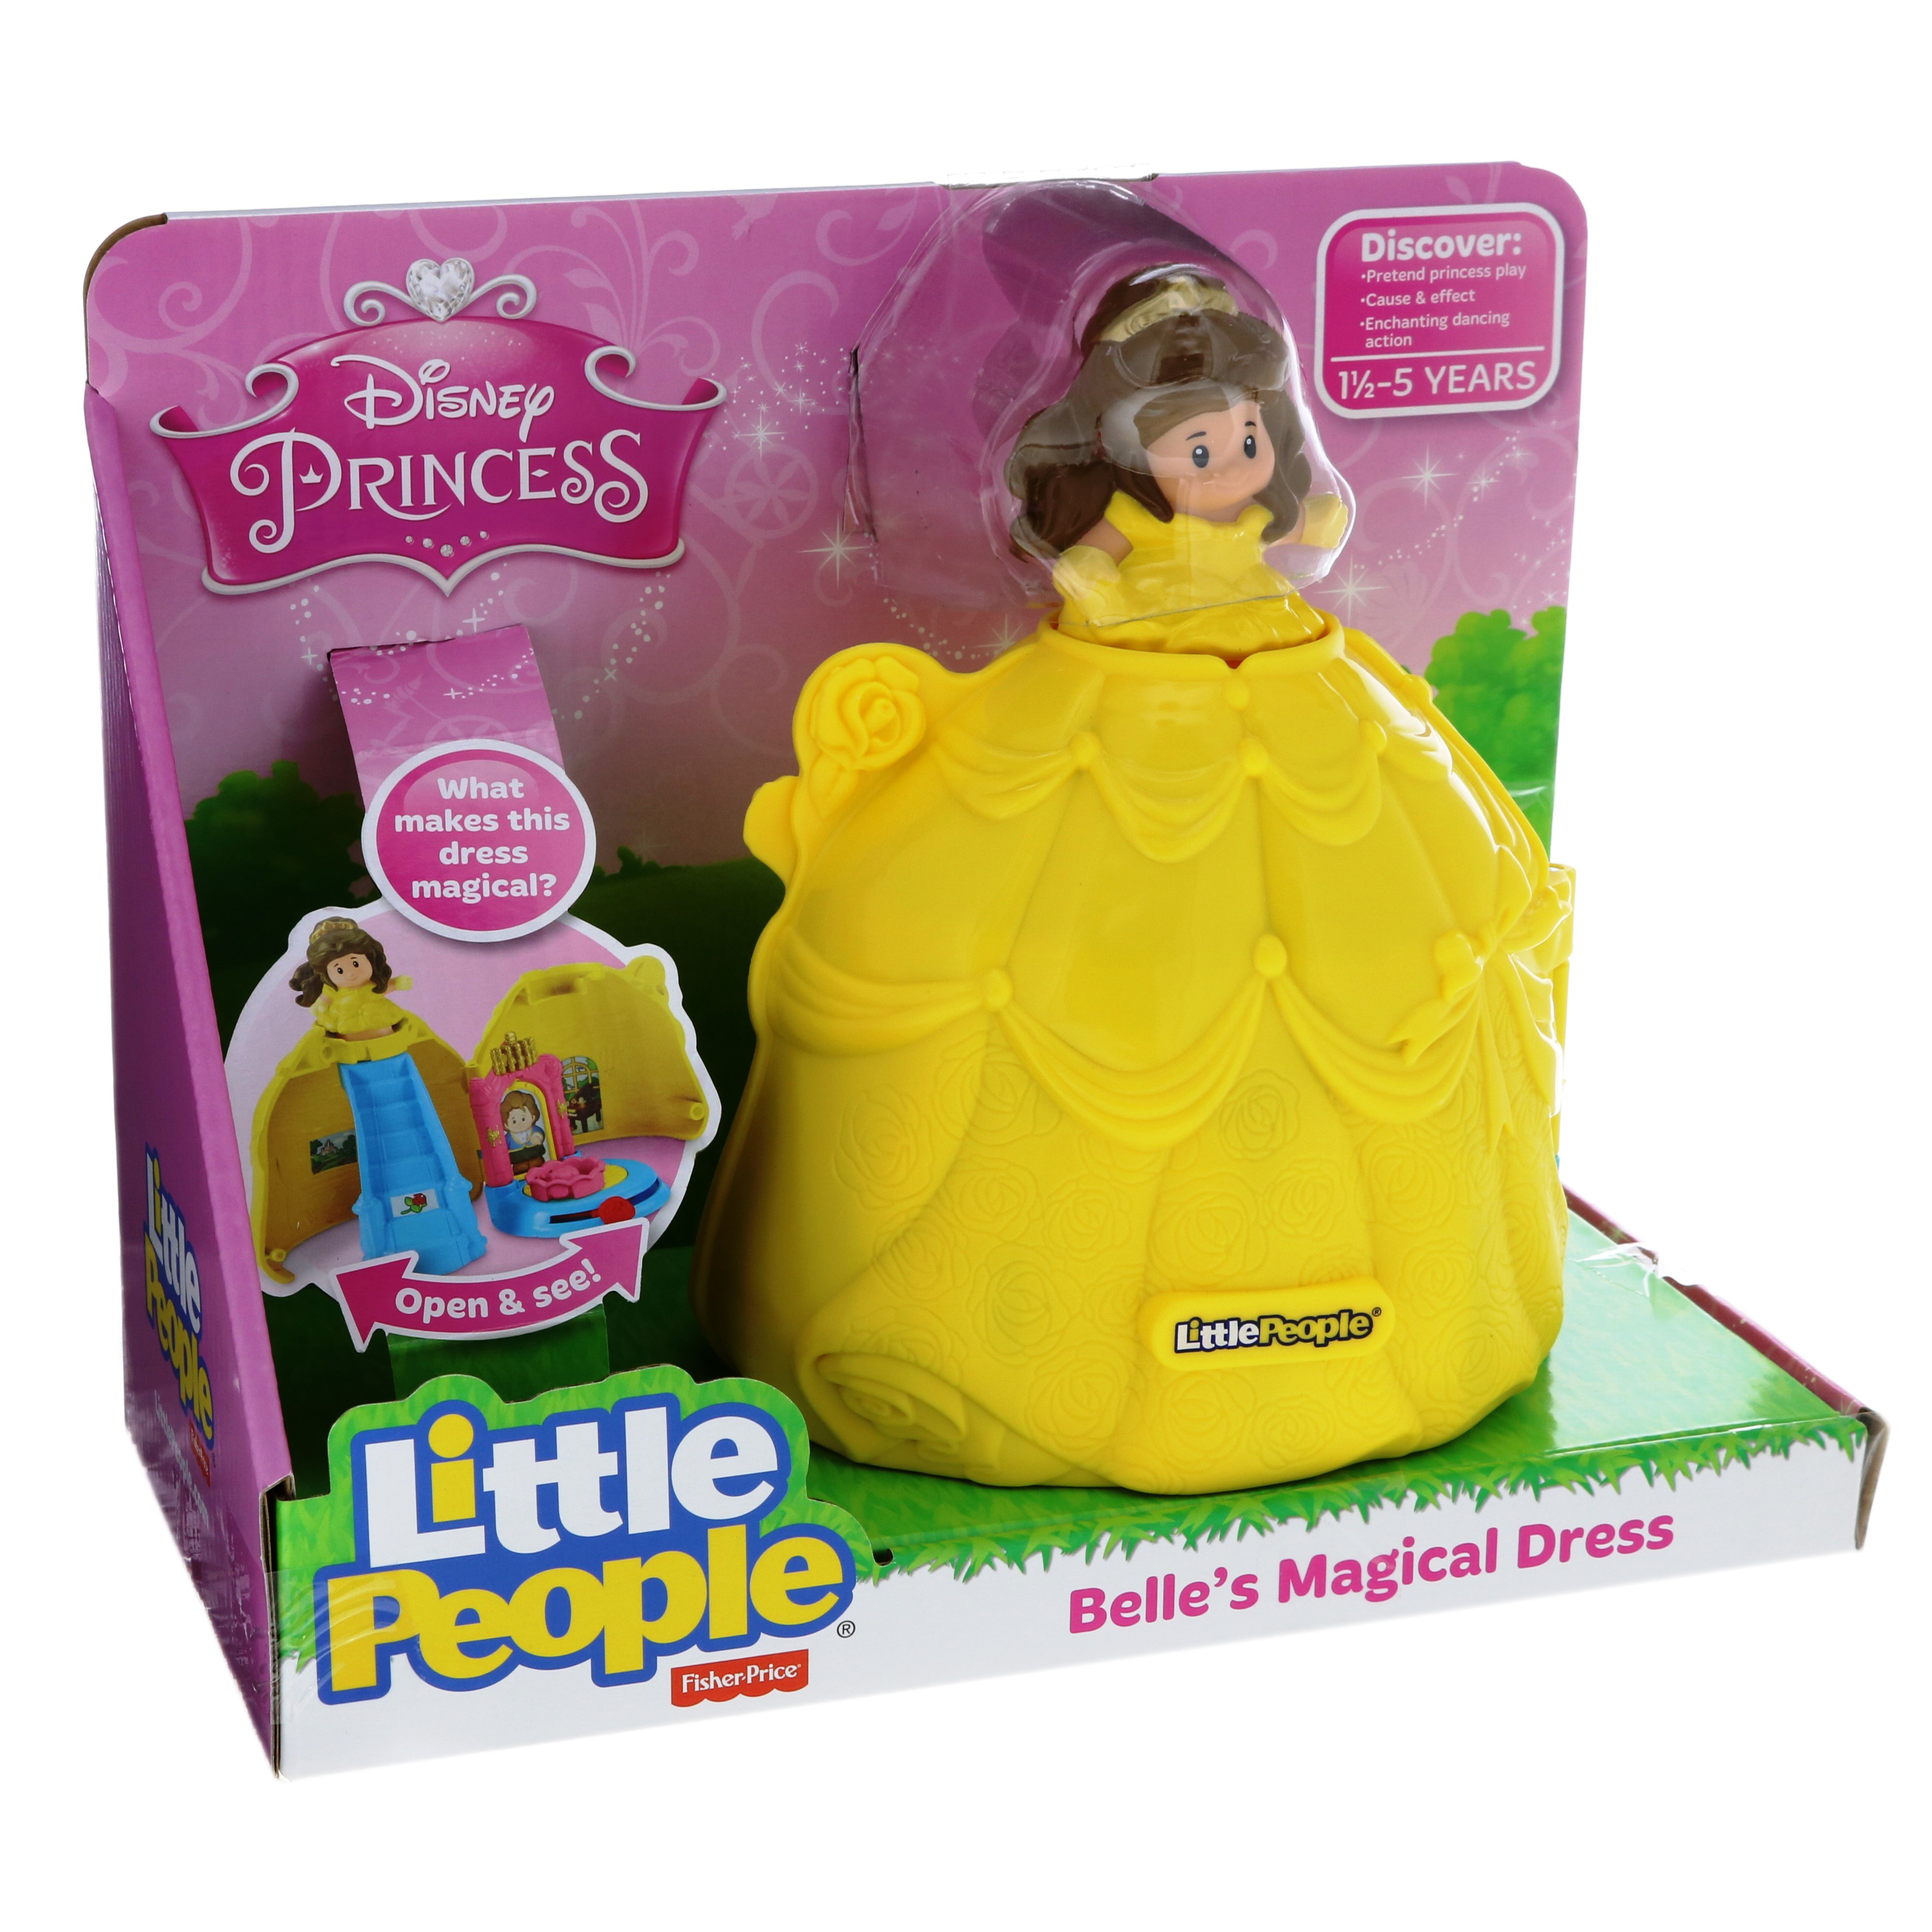  Fisher-Price Little People Disney Princess